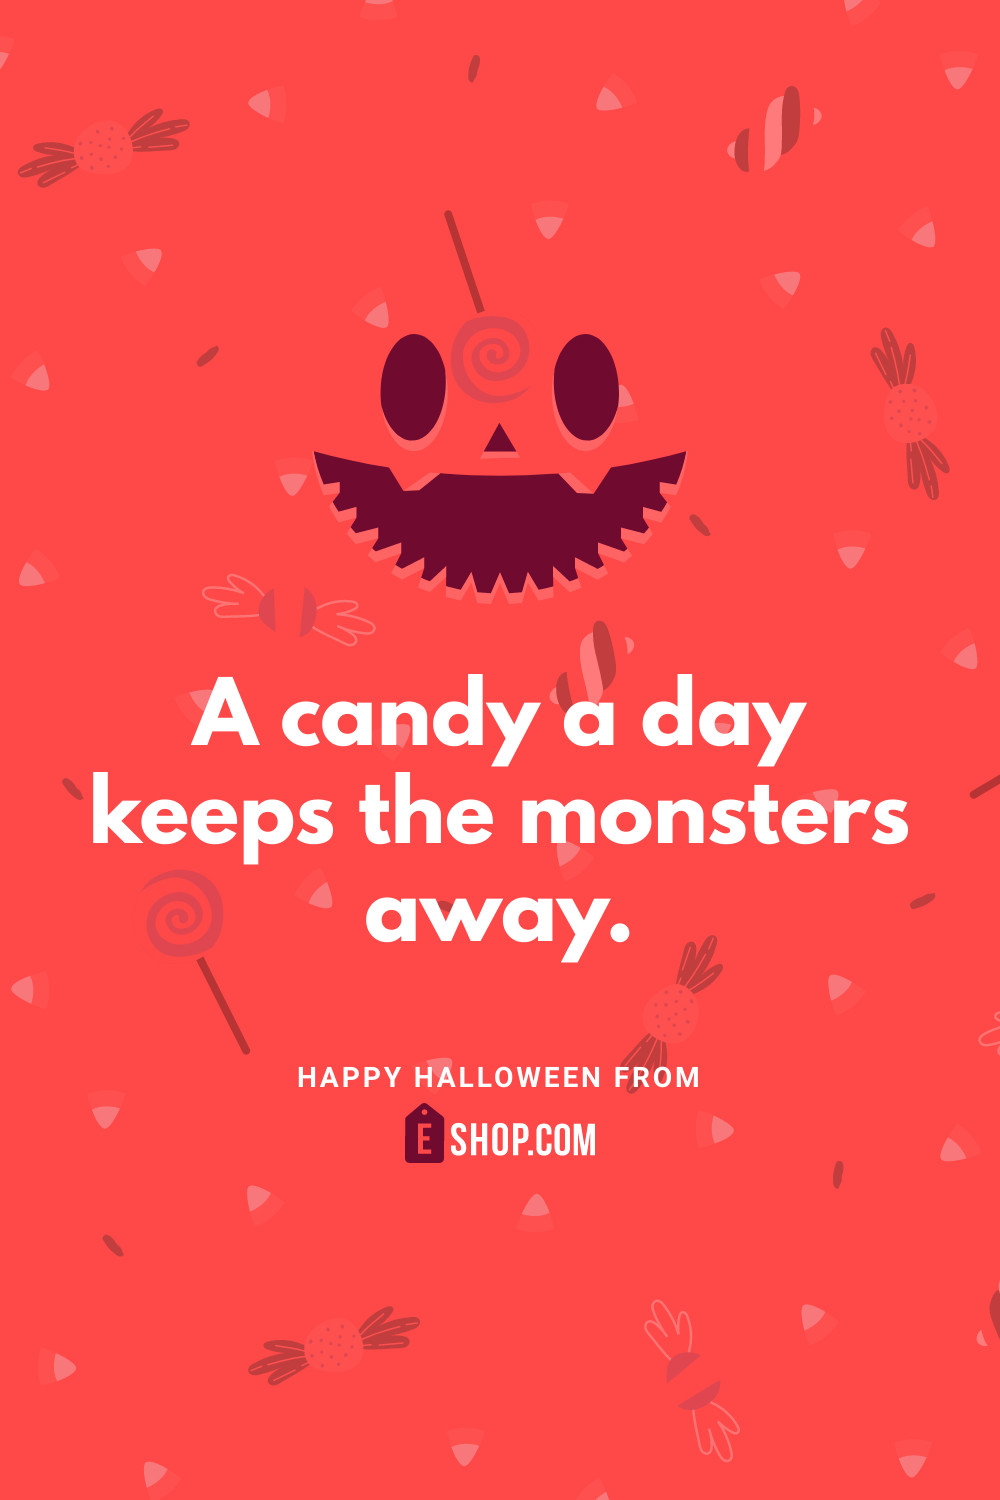 Eshop Candy a Day Halloween  Facebook Cover 820x360